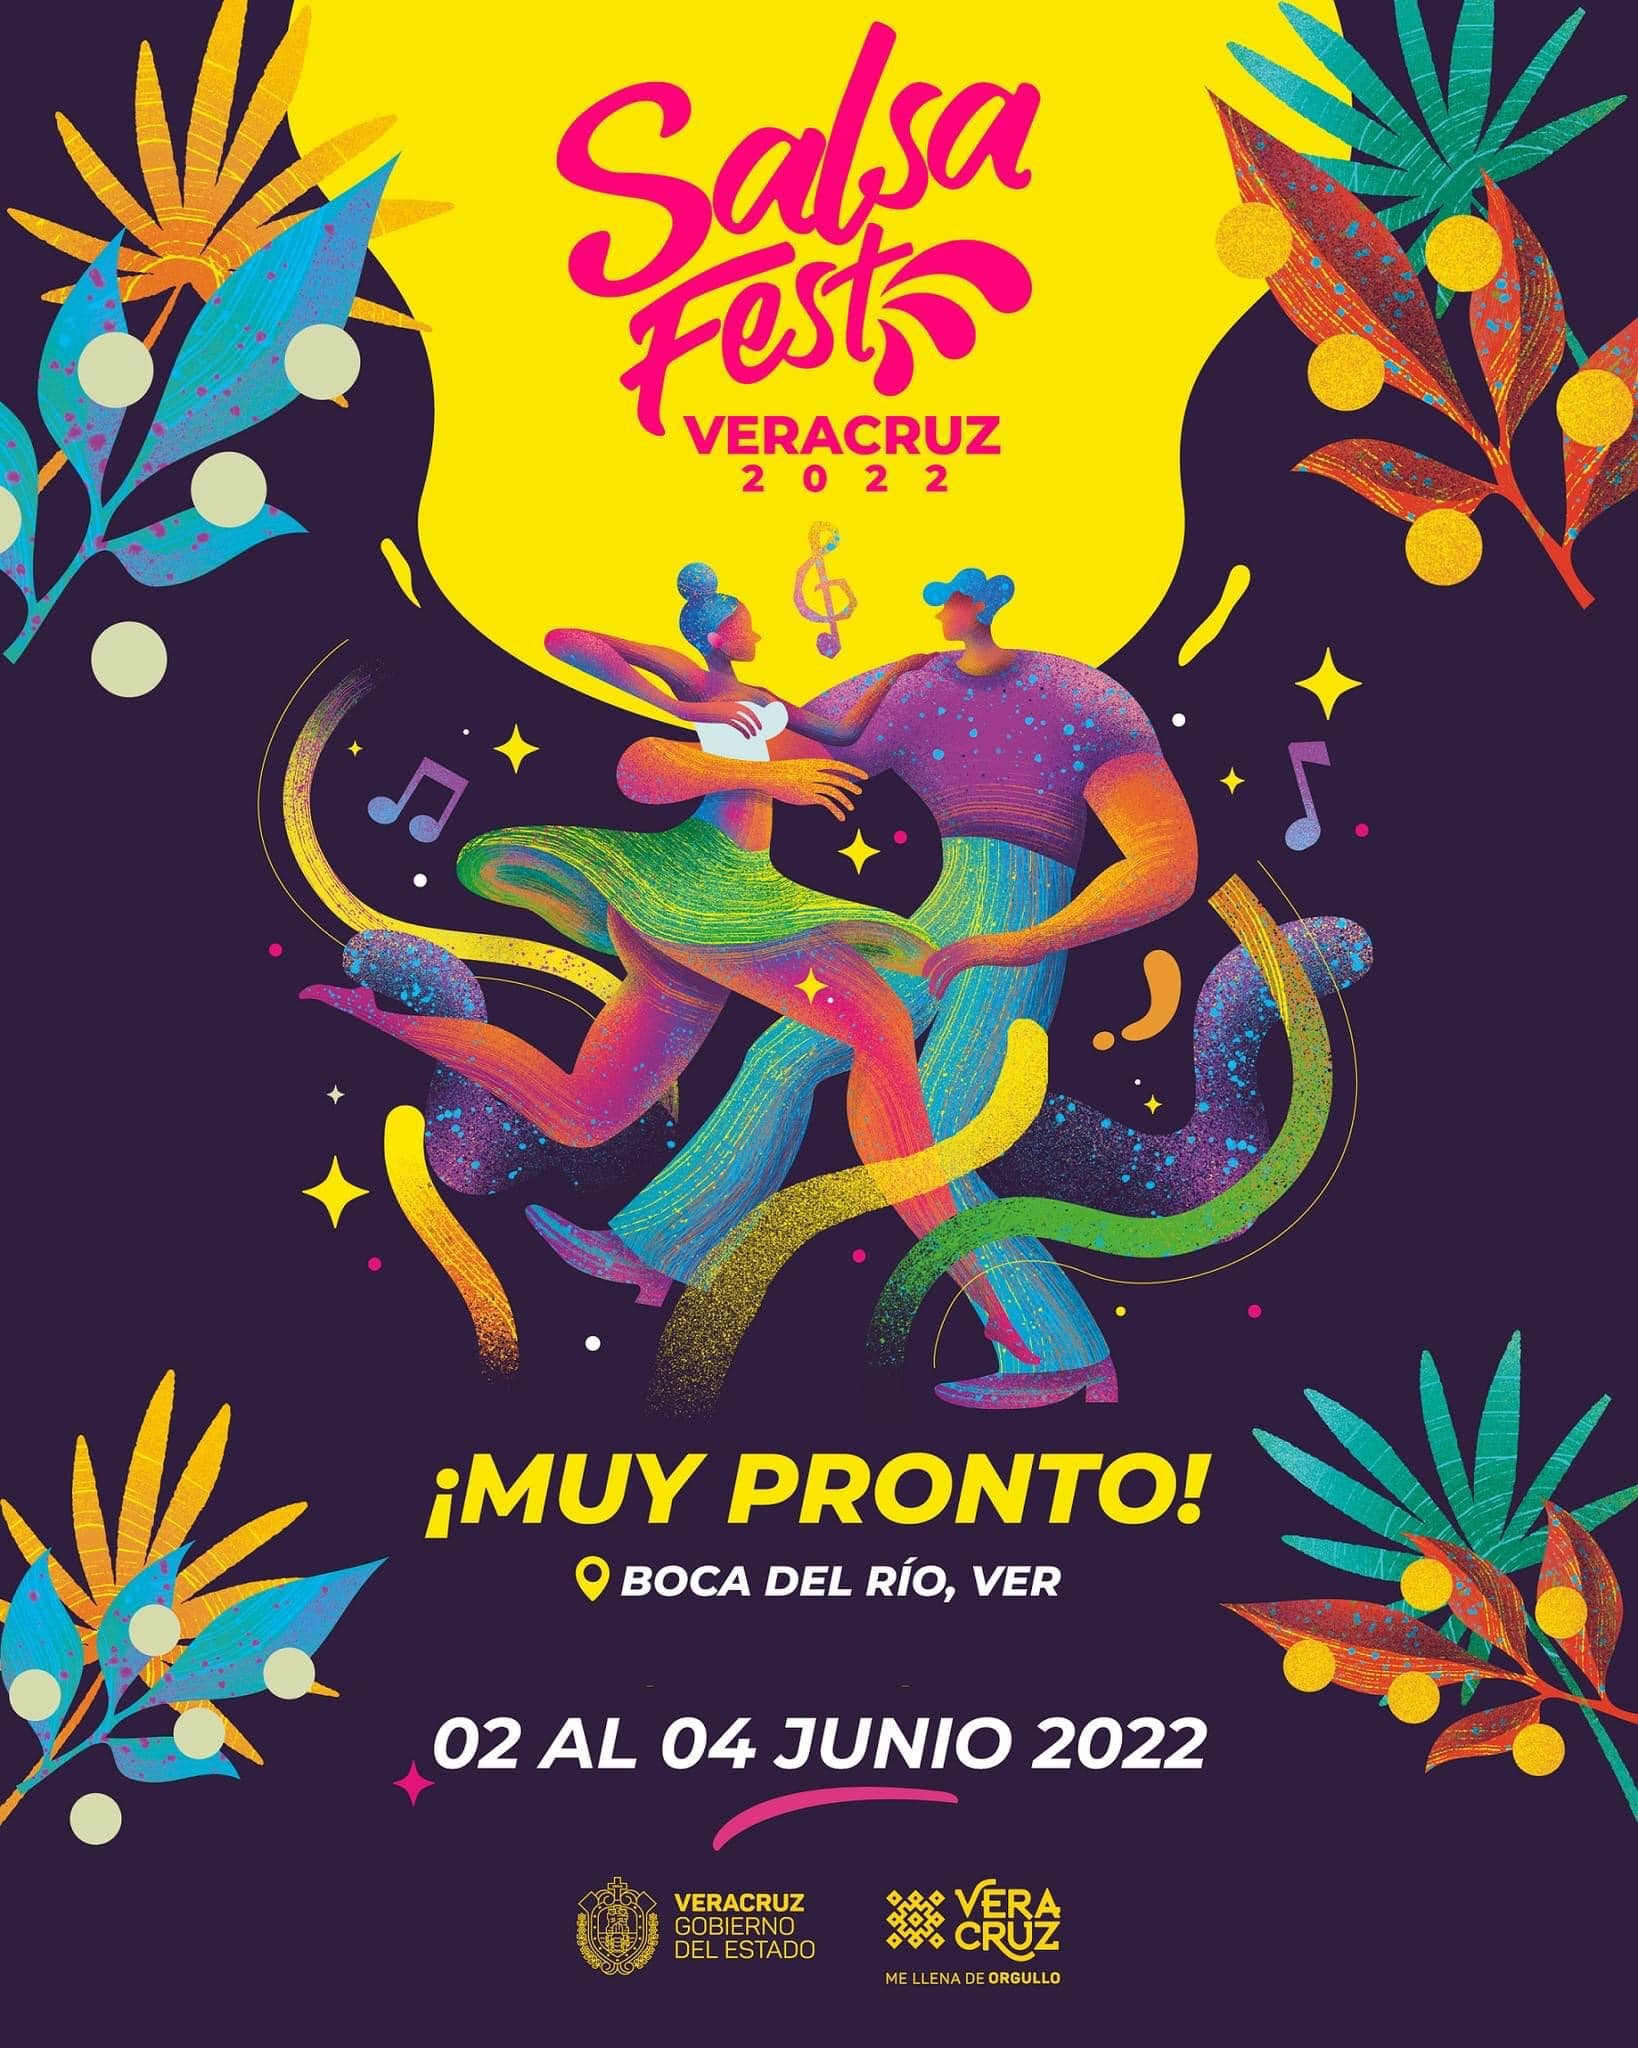 Regresa el Salsa Fest a Veracruz, ¡prepara tus mejores pasos! >